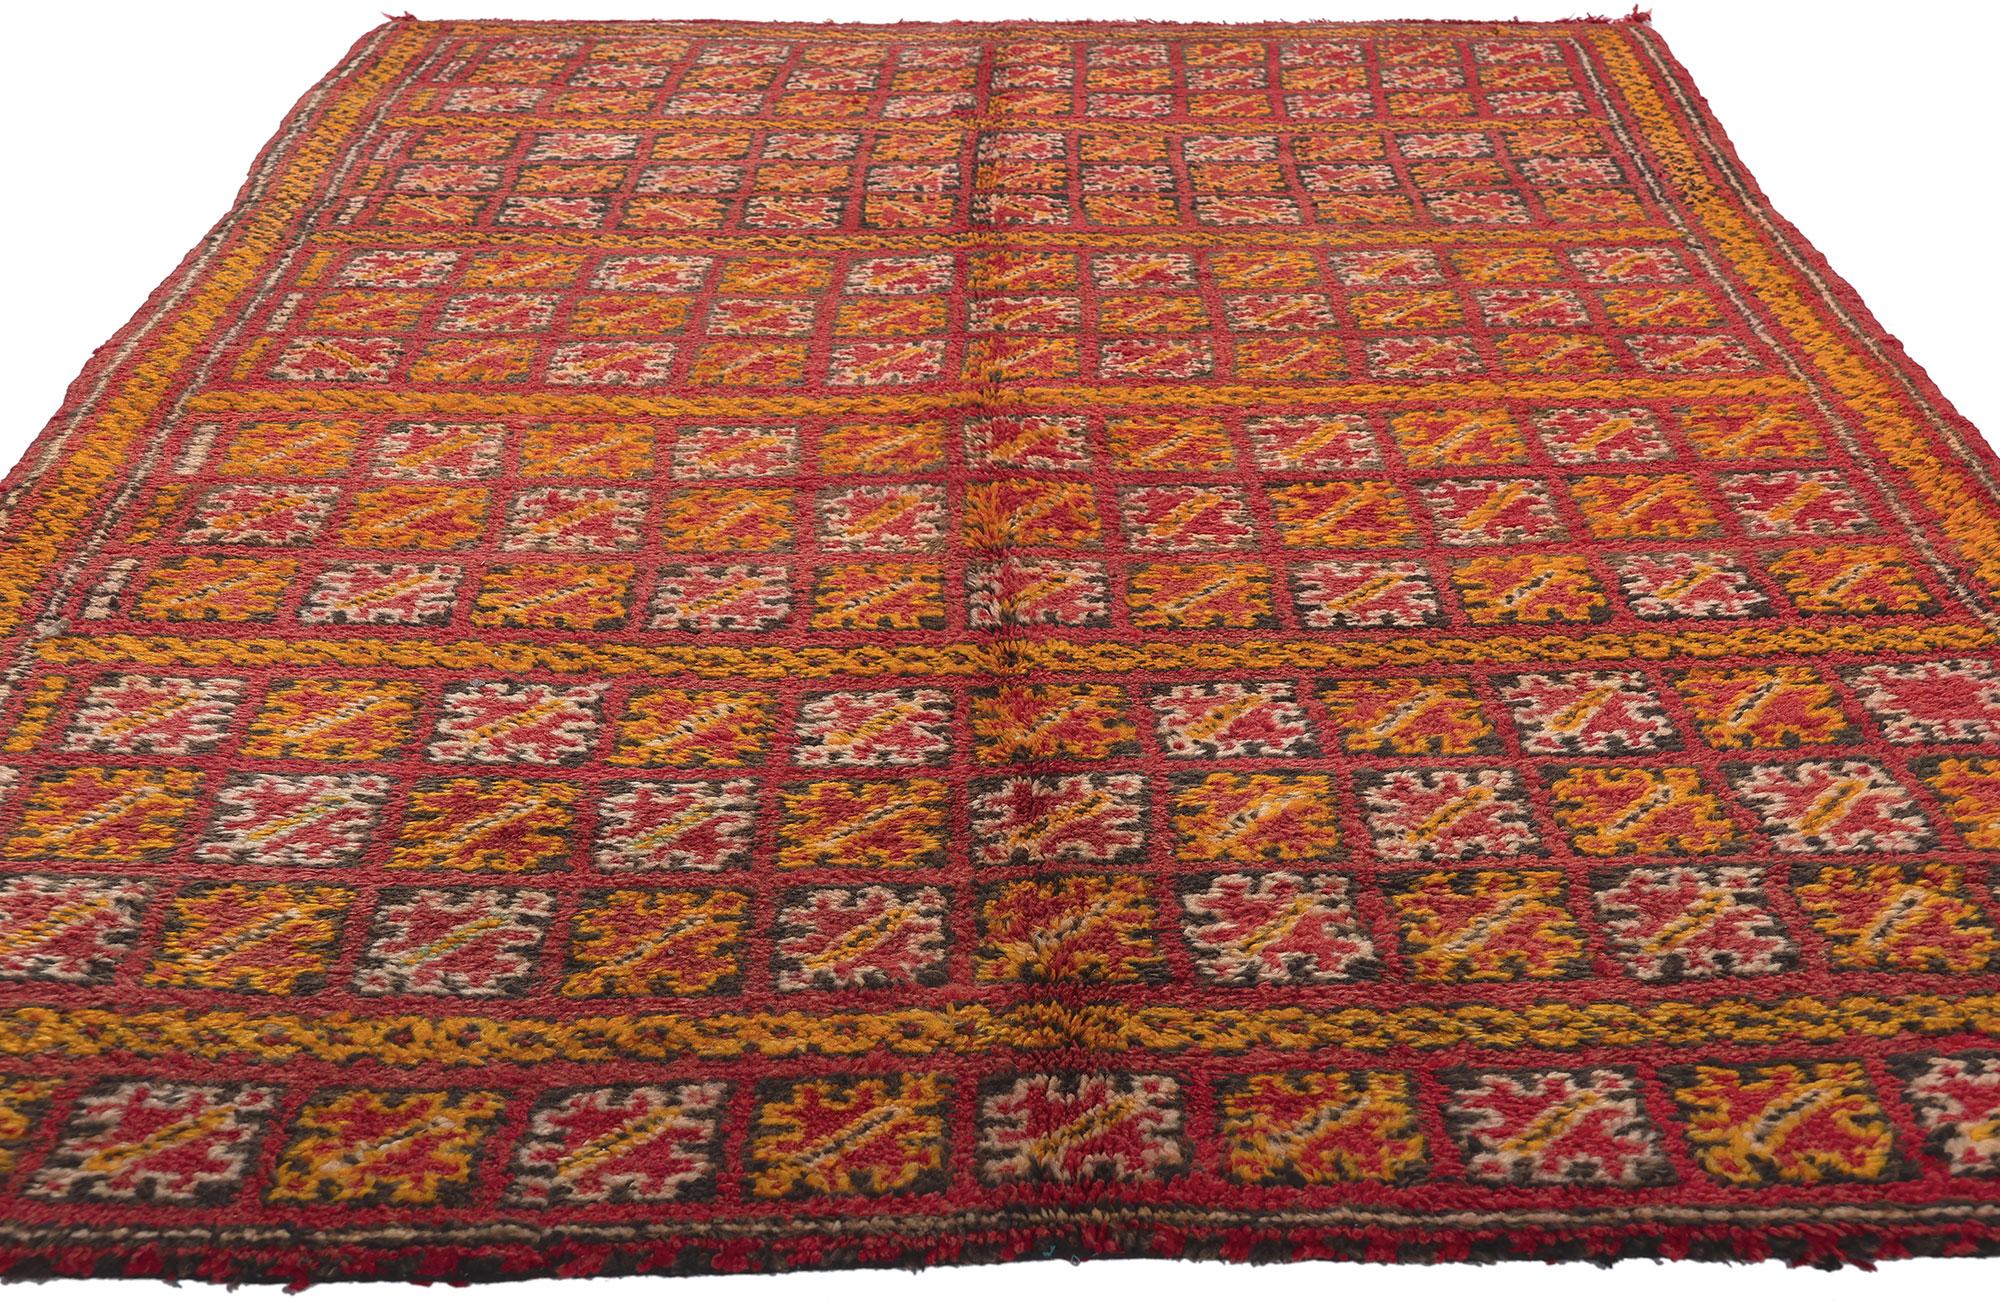 Tribal Vintage Beni MGuild Moroccan Rug, Midcentury Modern Meets Maximalist Boho For Sale